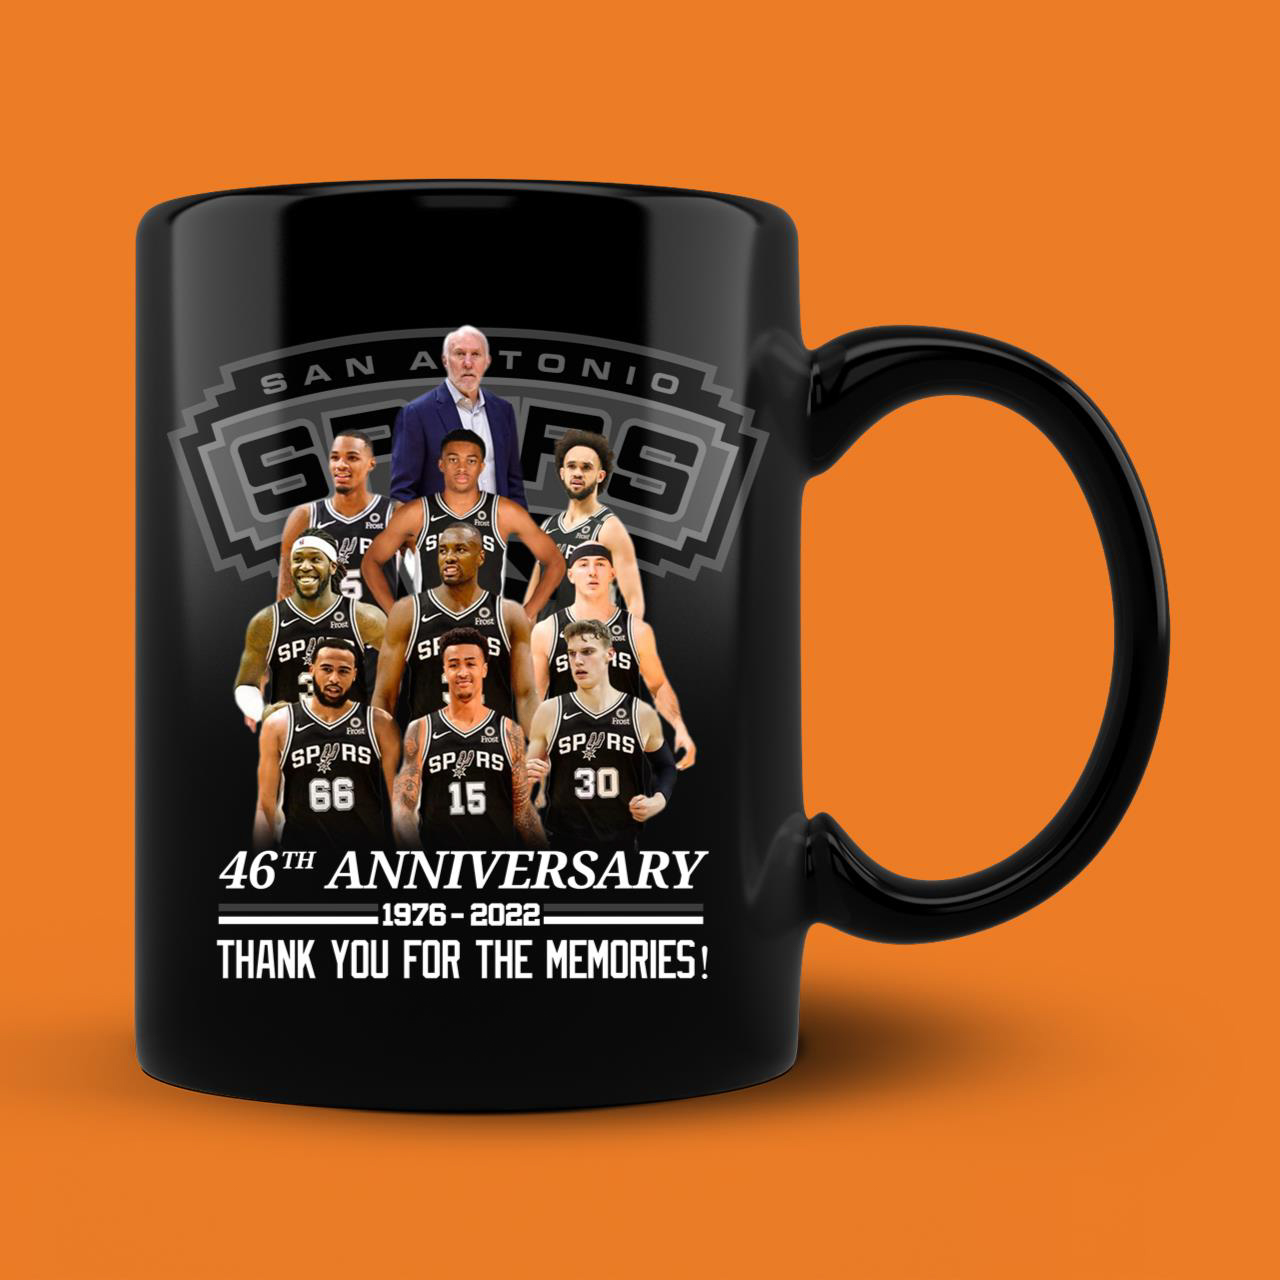 San Antonio Spurs 46th Anniversary 1976 2022 Thank You For The Memories Mug